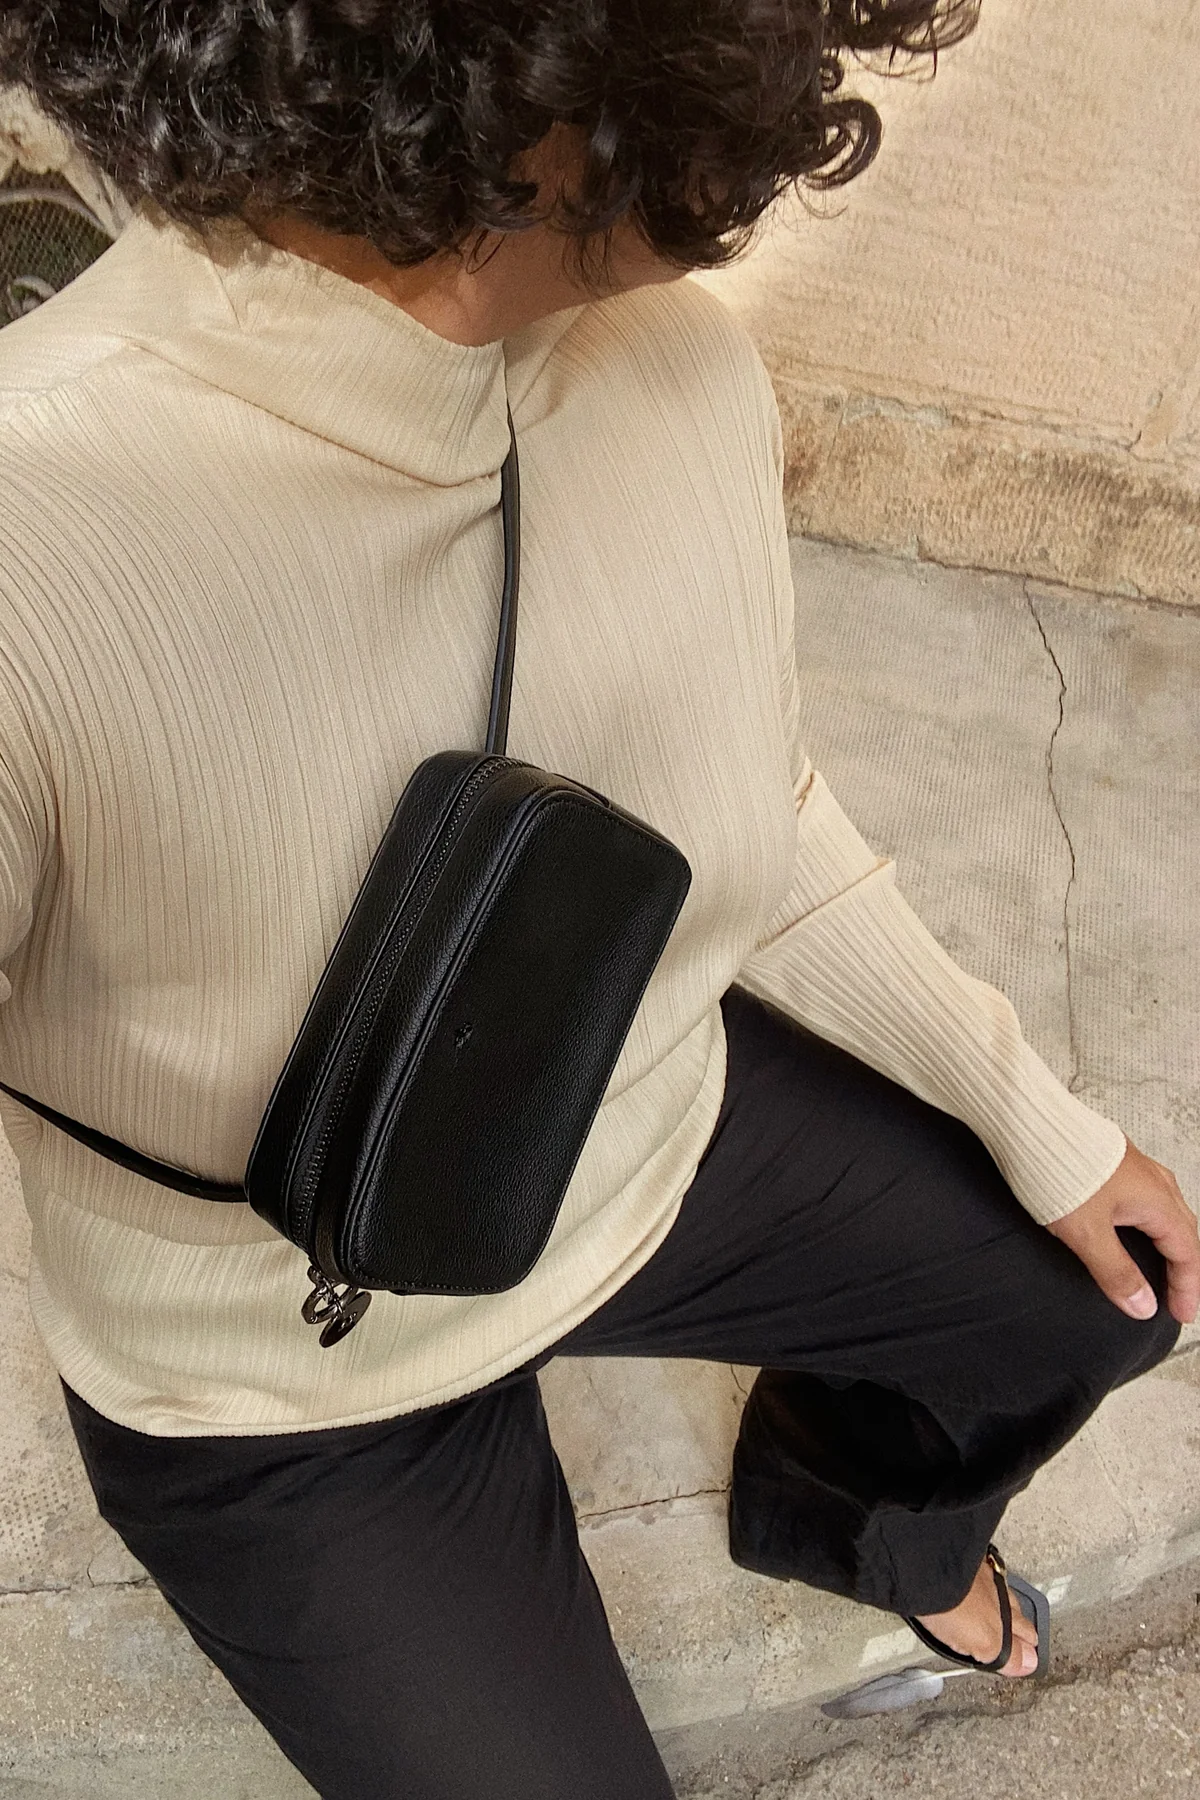 Ela Micro Belt Bag - Black Accessories - Other Accessories - Handbags & Wallets by Ela | Grace the Boutique